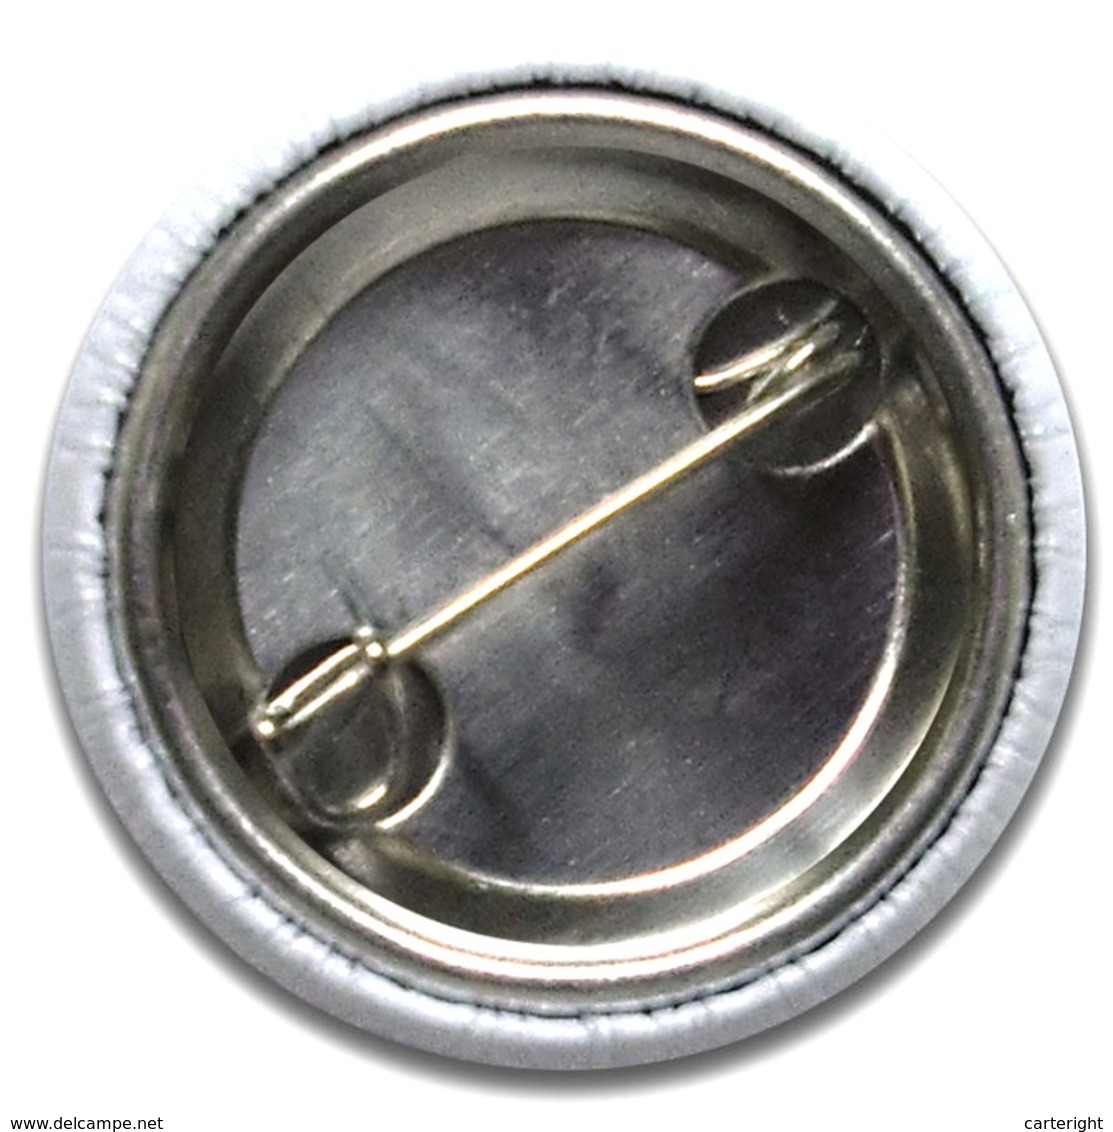 Johnny Hallyday Music Fan ART BADGE BUTTON PIN SET 1 (1inch/25mm Diameter) 35 DIFF - Music